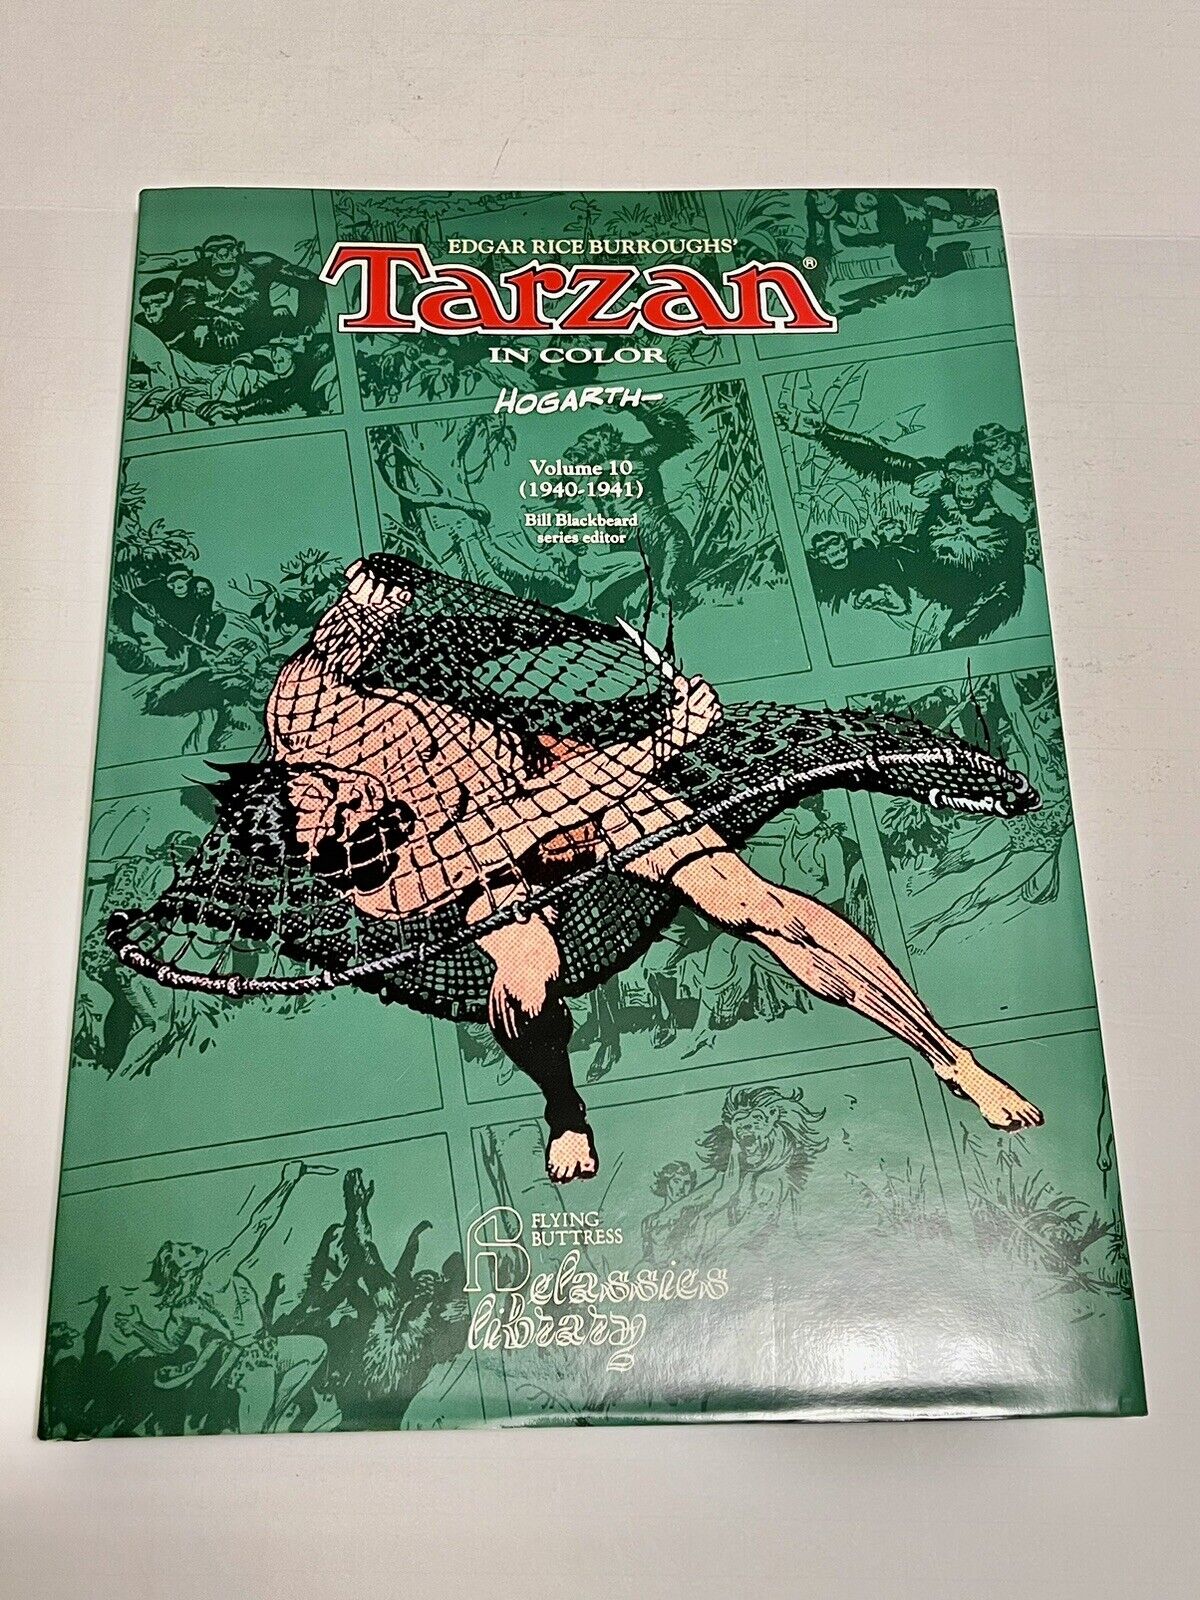 Edgar Rice Burroughs' Tarzan In Color Volume 10 With Dust Jacket